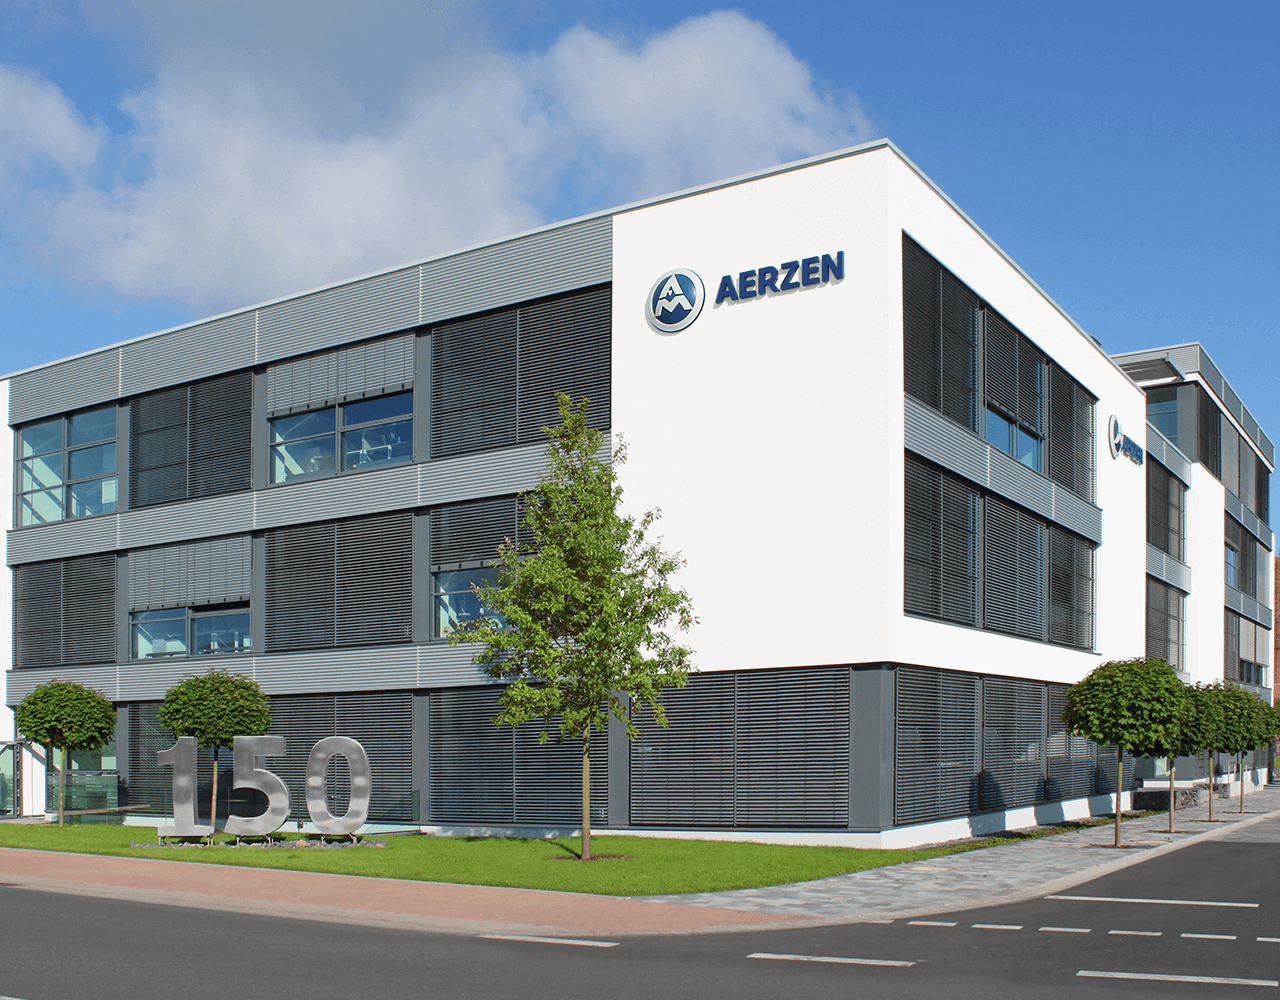 AERZEN Maschinenfabrik GmbH şirketinin resmi